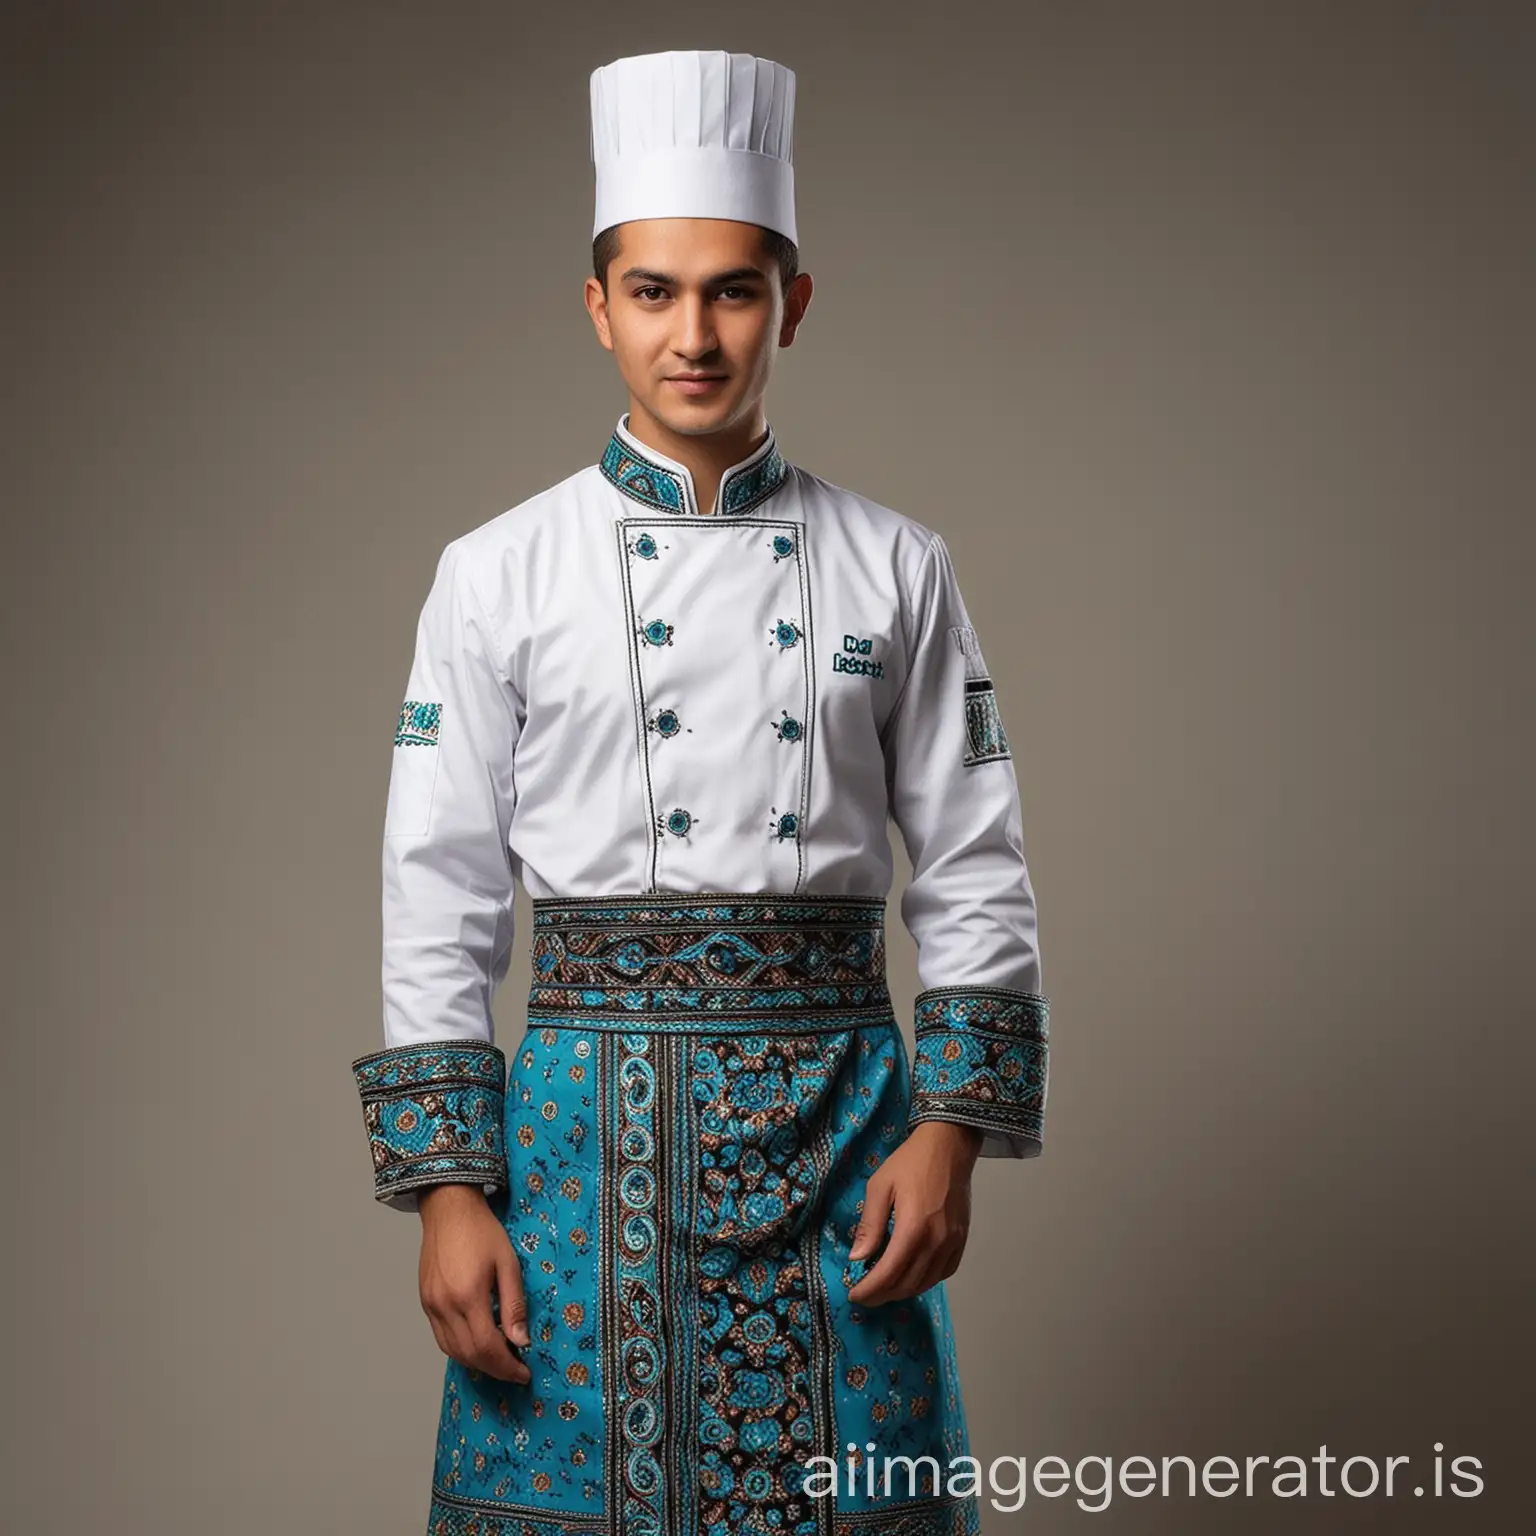 Create chef uniform for Doppi Restaurant. Make it look like the traditional clothing of Uzbekistan and include Uzbek doppis